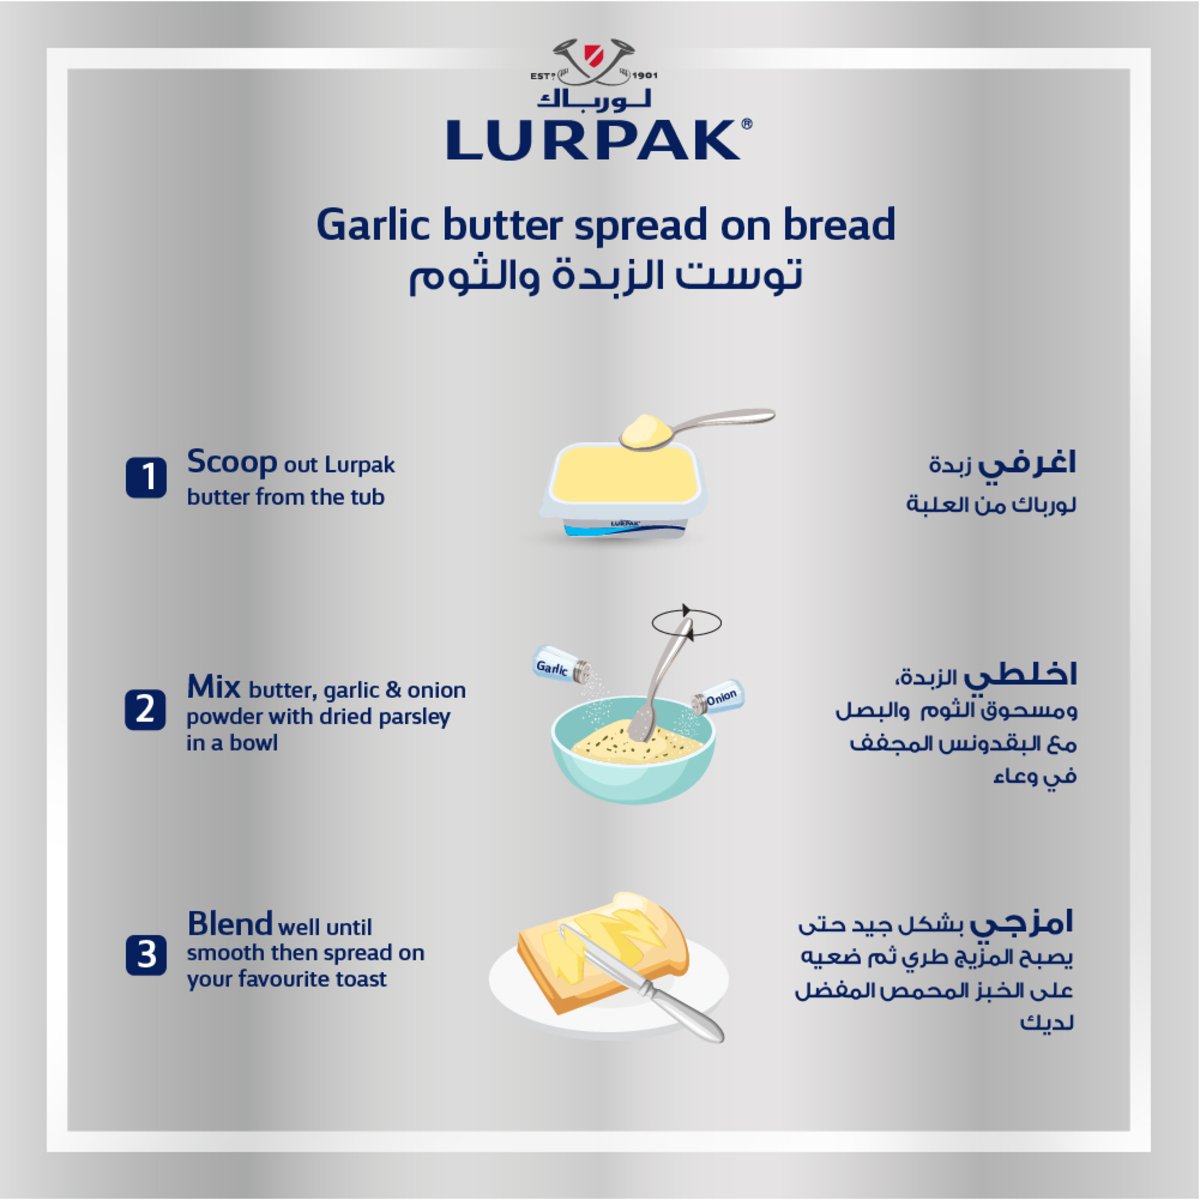 Lurpak Spreadable Light Butter Salted 250 g